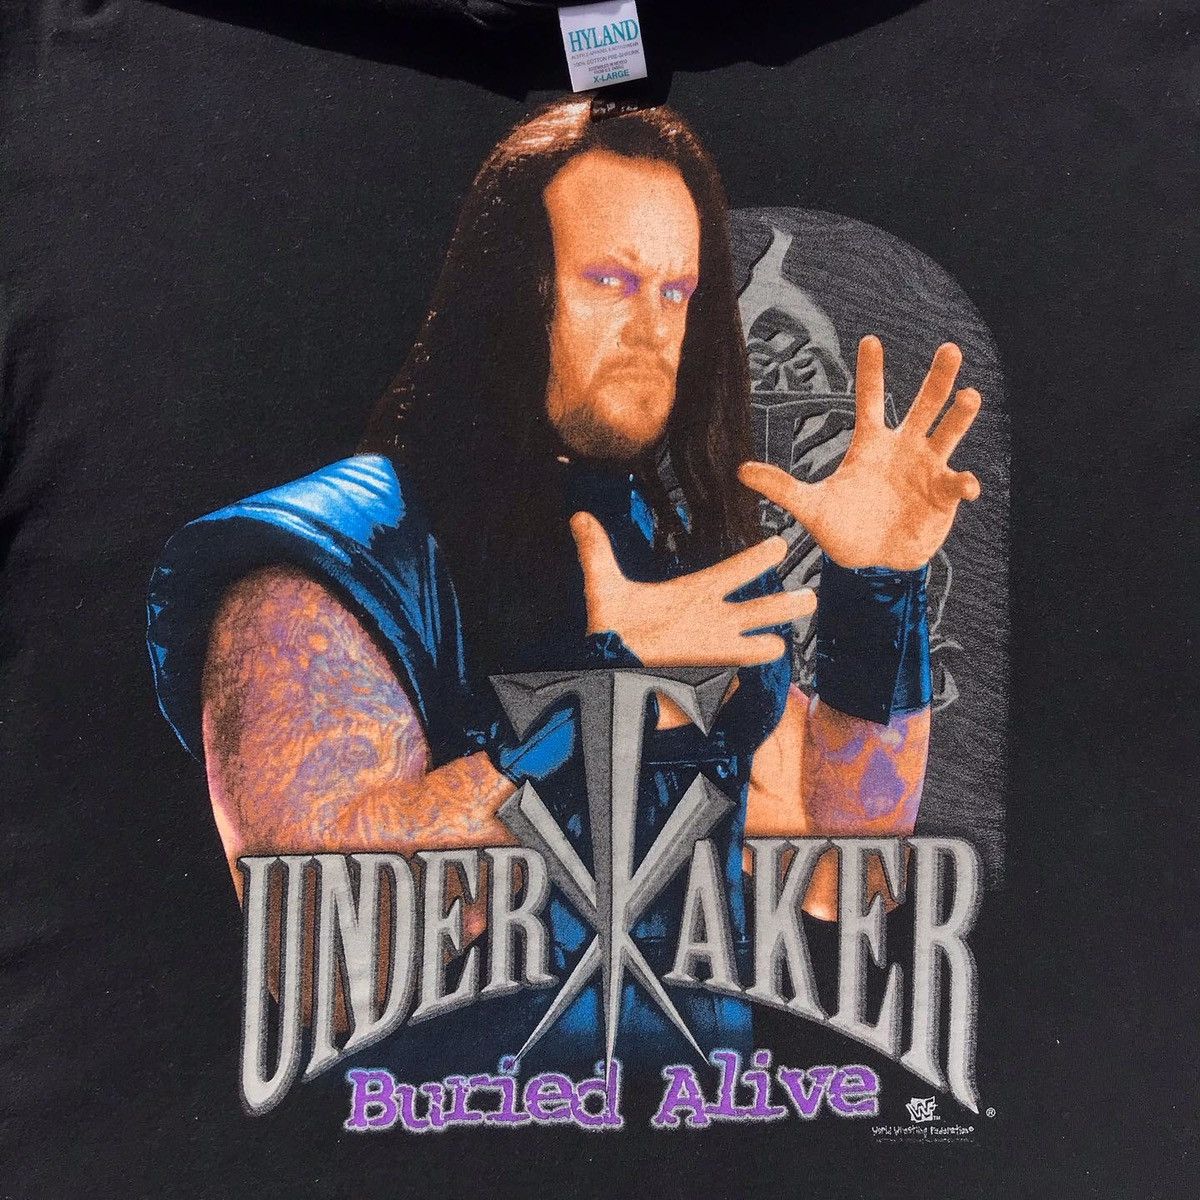 Vintage Vintage 1998 WWF Undertaker Buried Alive Tee Size US XL / EU 56 / 4 - 3 Thumbnail